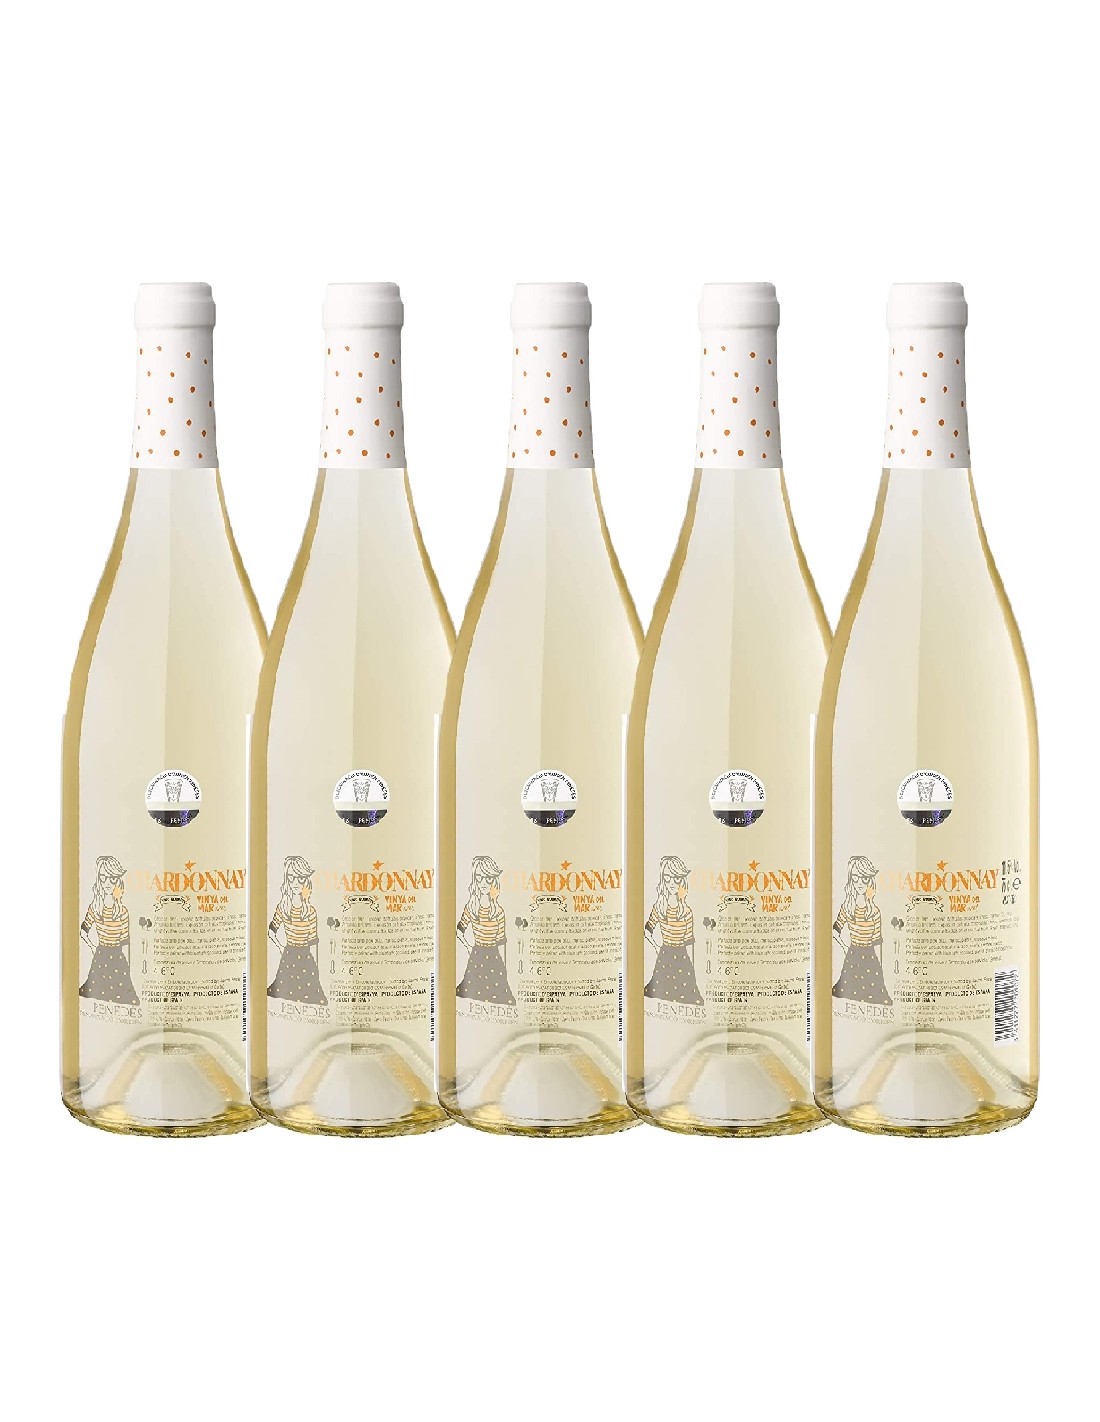 Pachet 5 sticle Vin alb, Chardonnay, Vinya del Mar, 11.5% alc., 0.75L, Spania alcooldiscount.ro